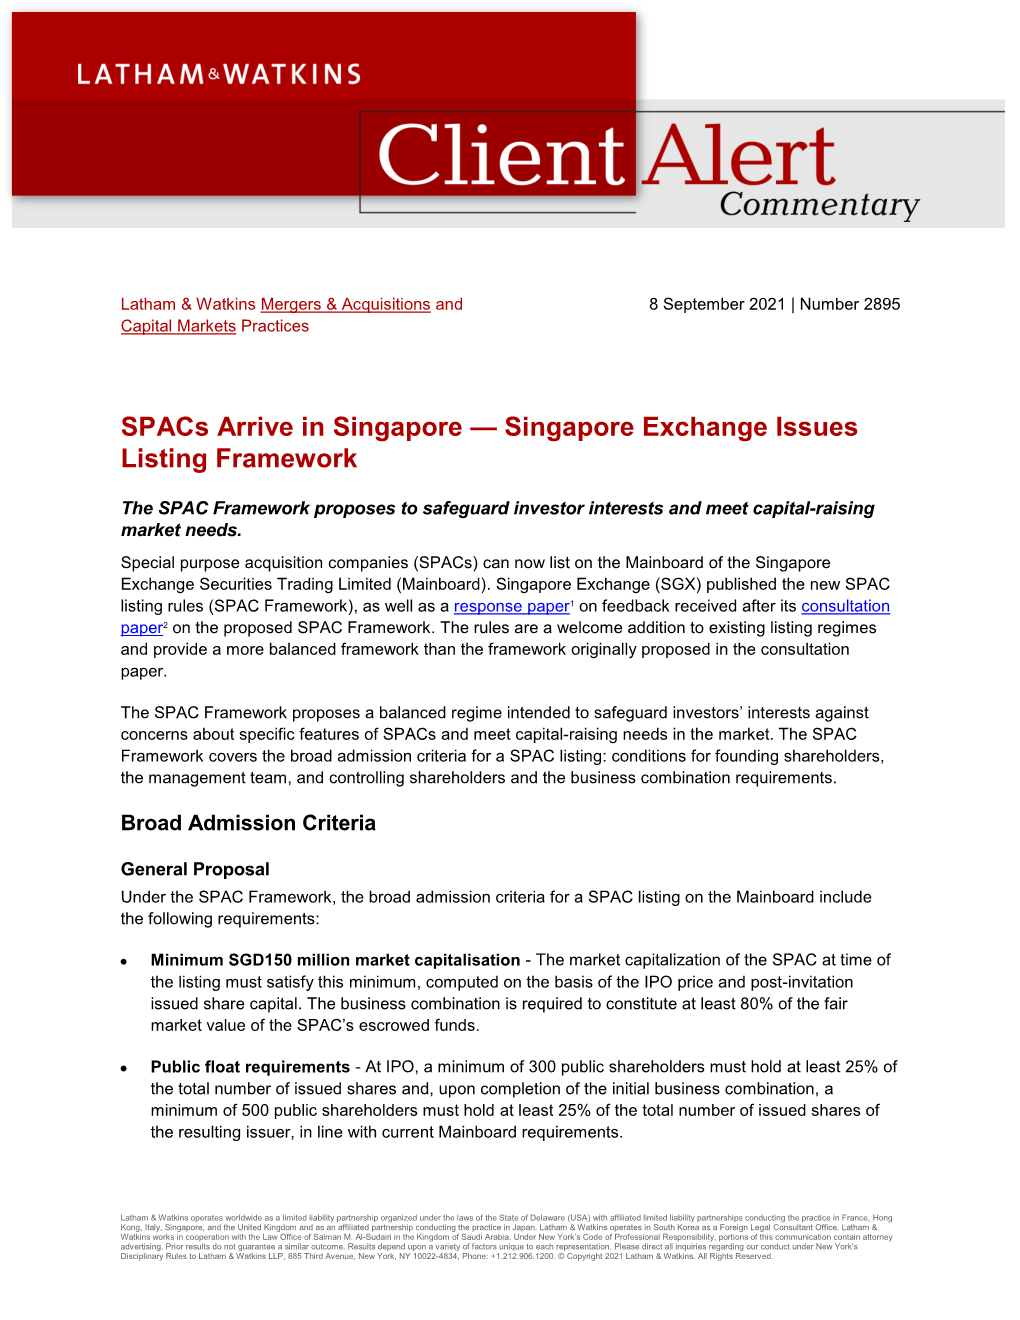 Singapore Exchange Issues Listing Framework